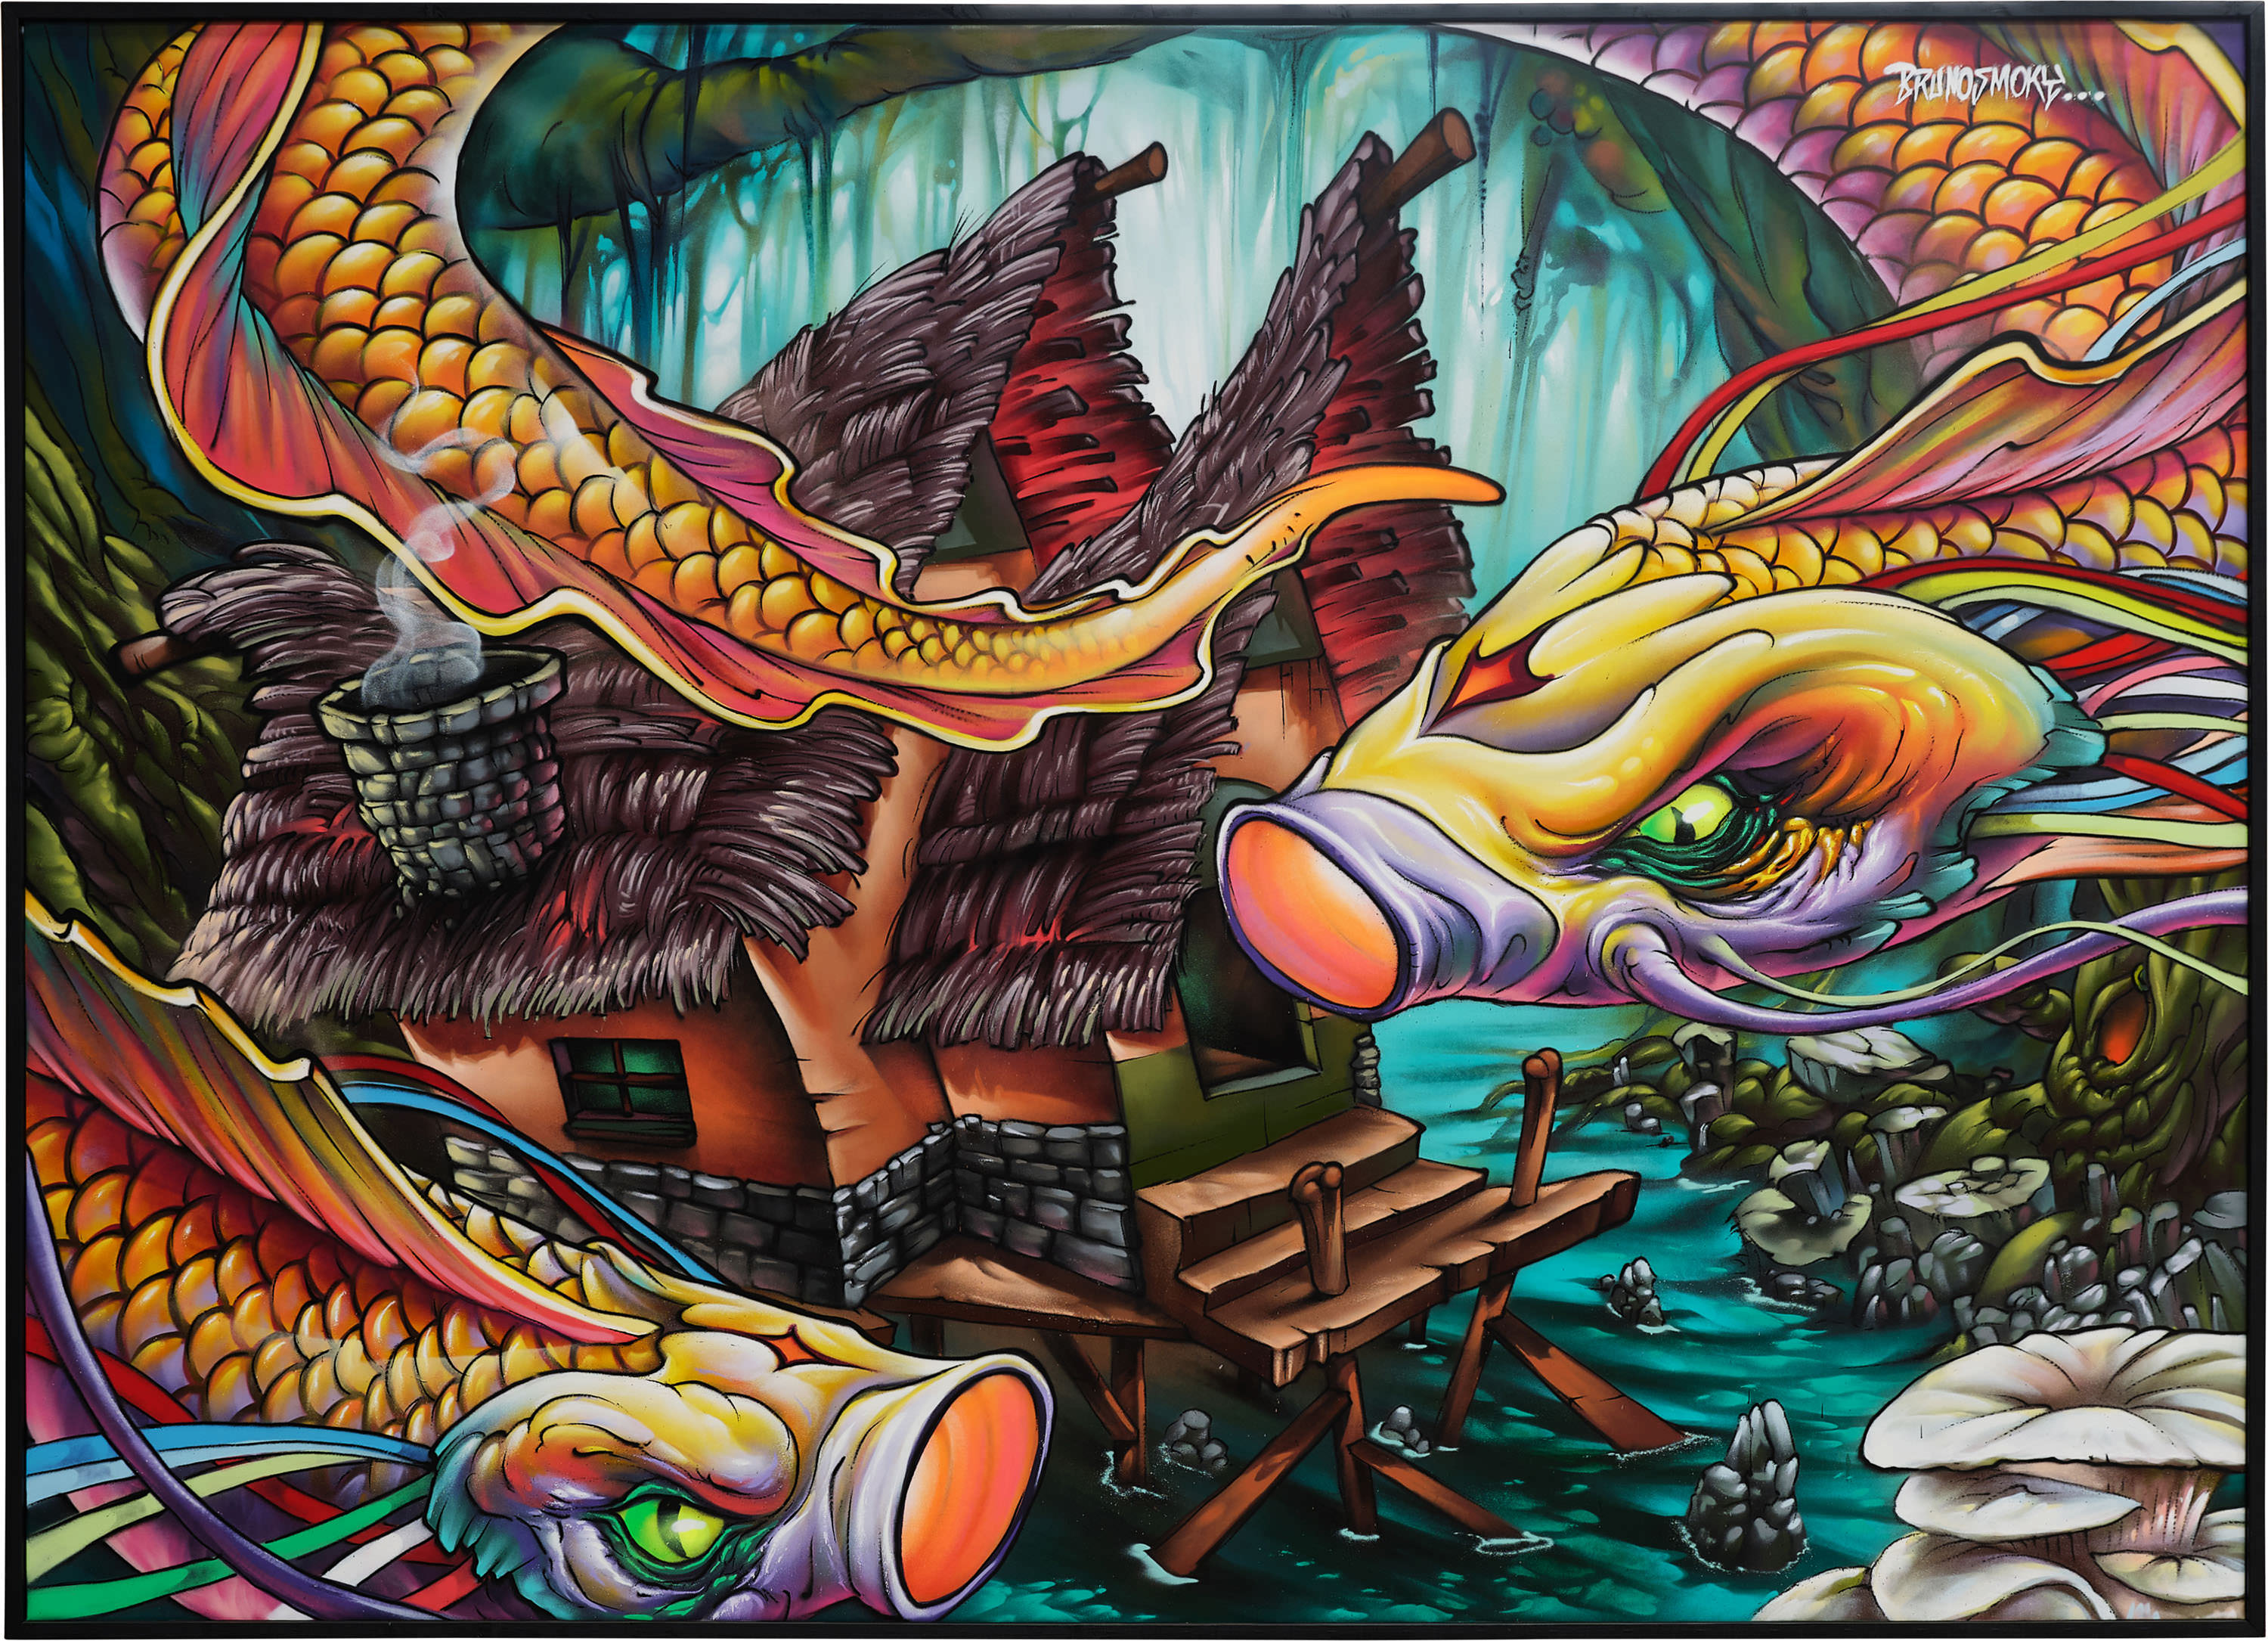 Bruno Smoky painting The dancing fish Straat International Street Art Museum